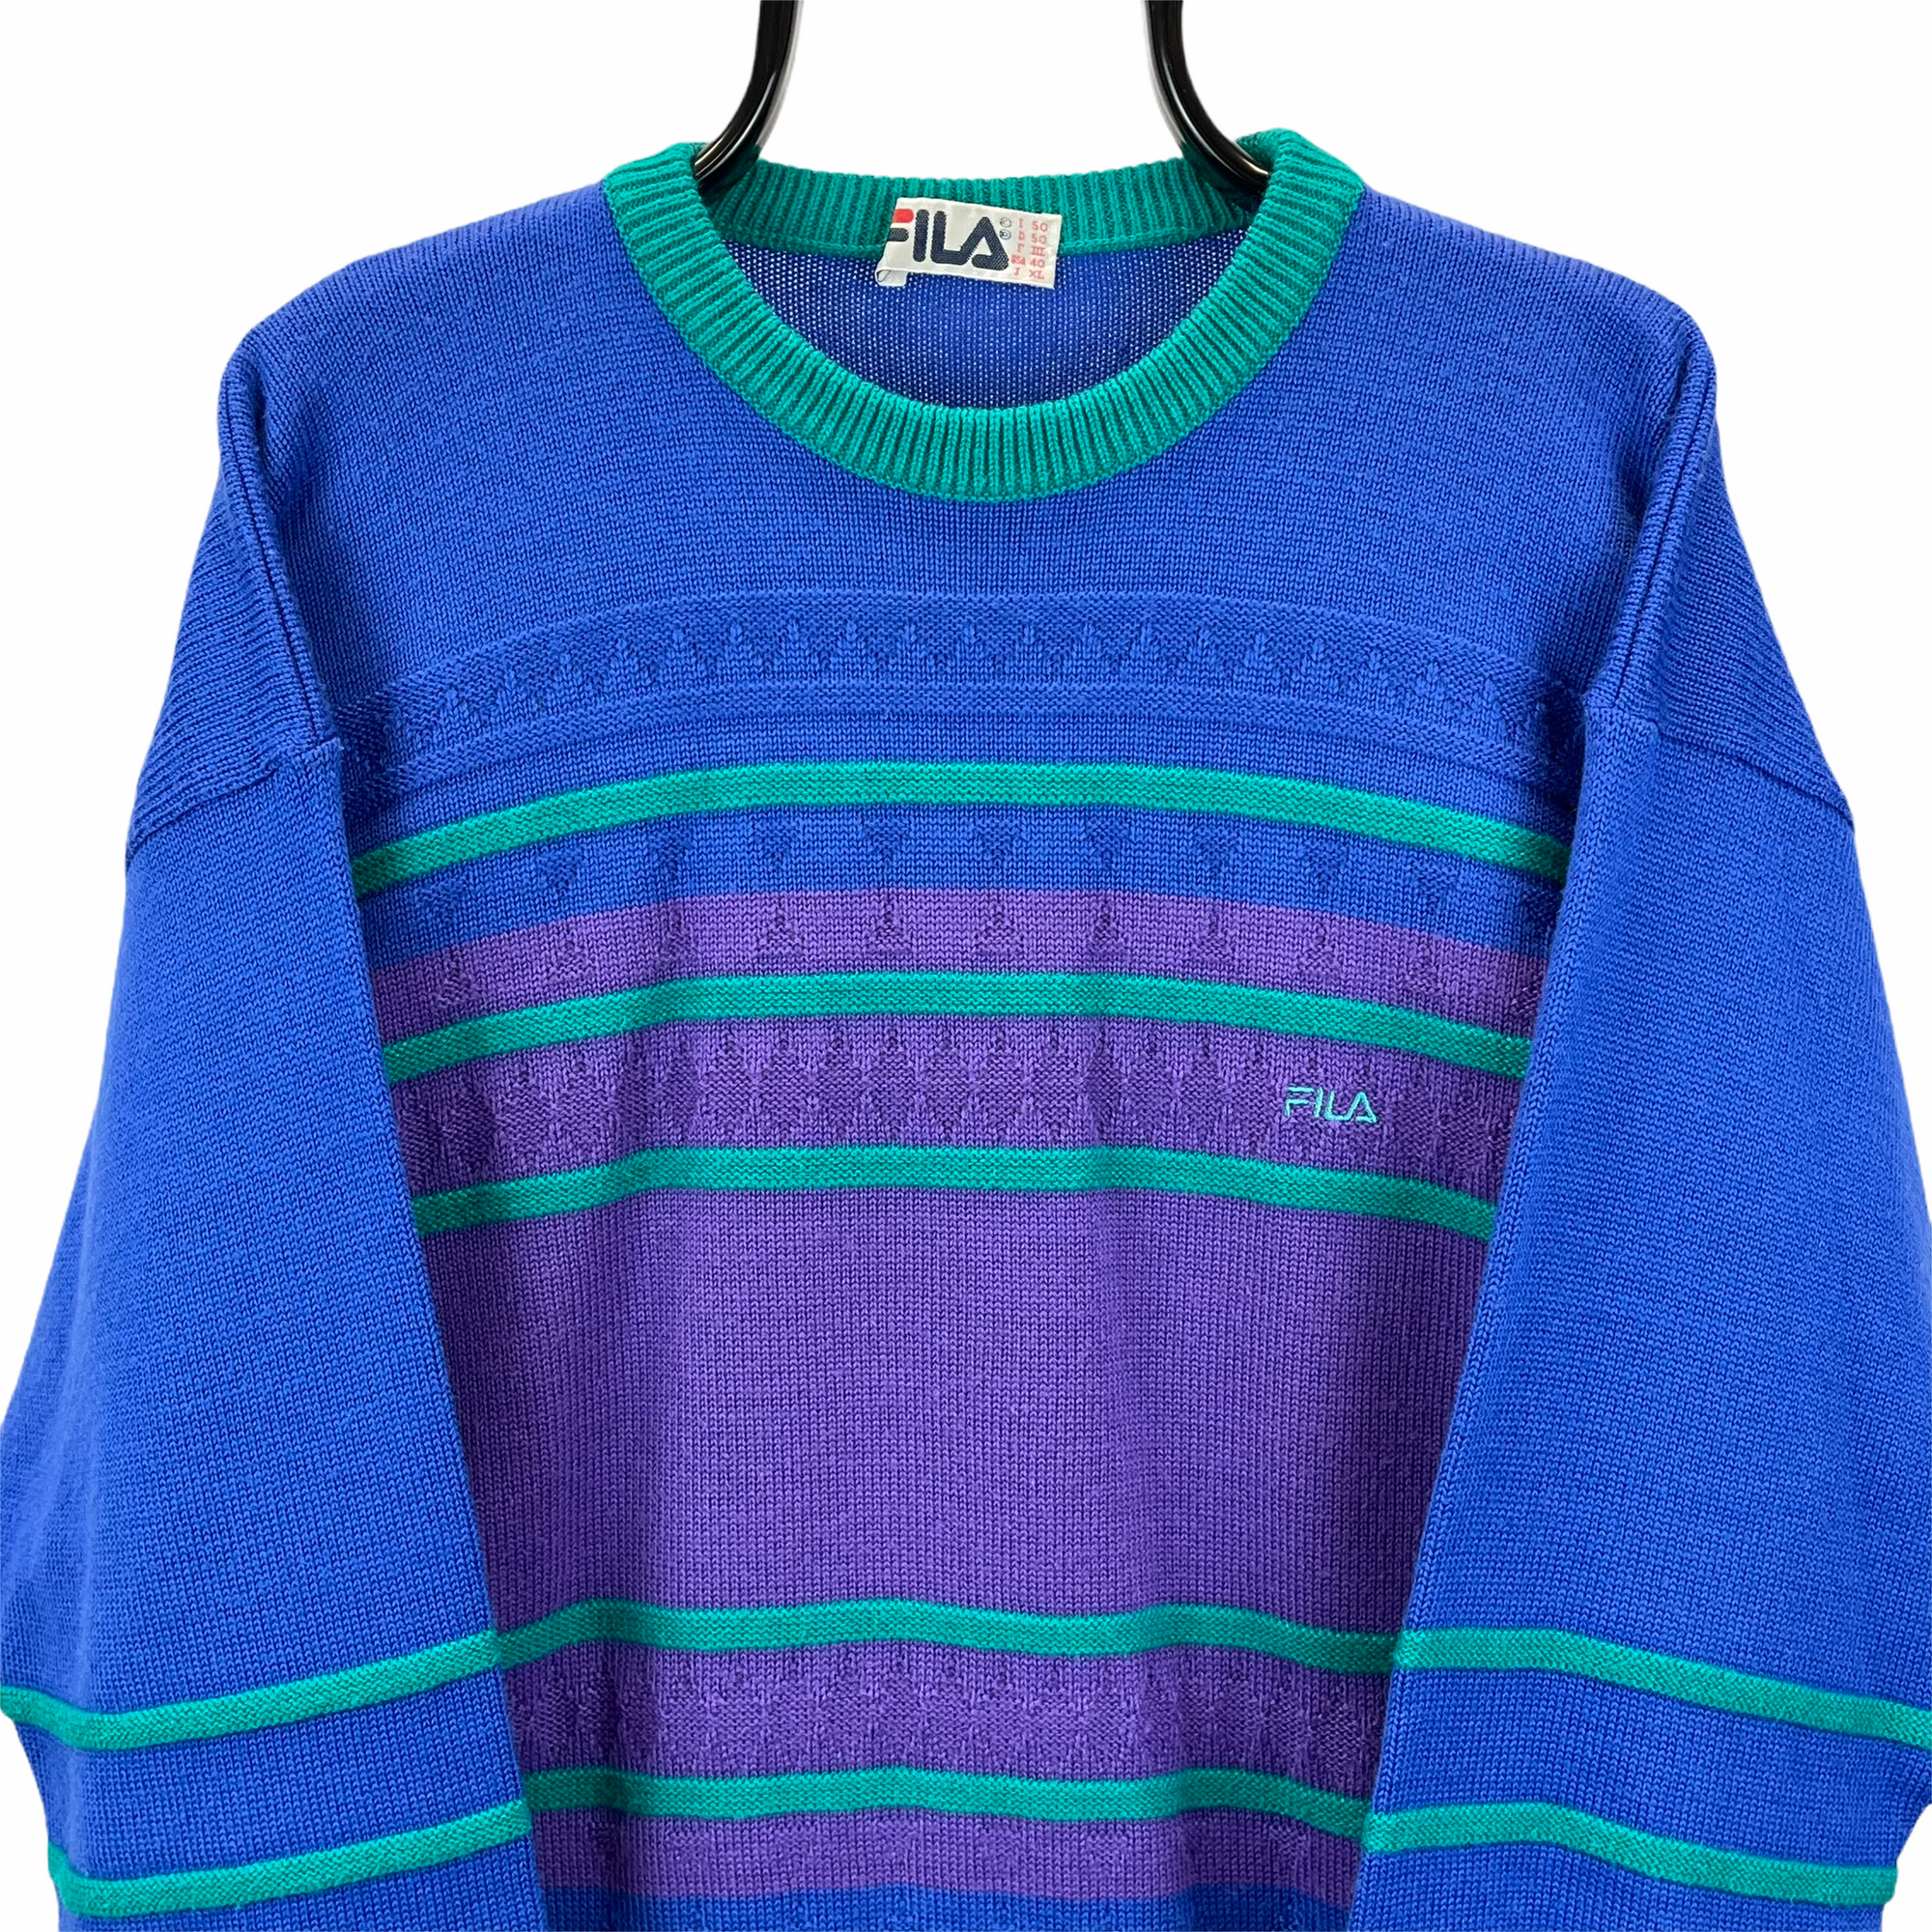 Vintage 90s Fila Knitted Jumper in Purple, Blue & Green - Men's Medium/Women's Large